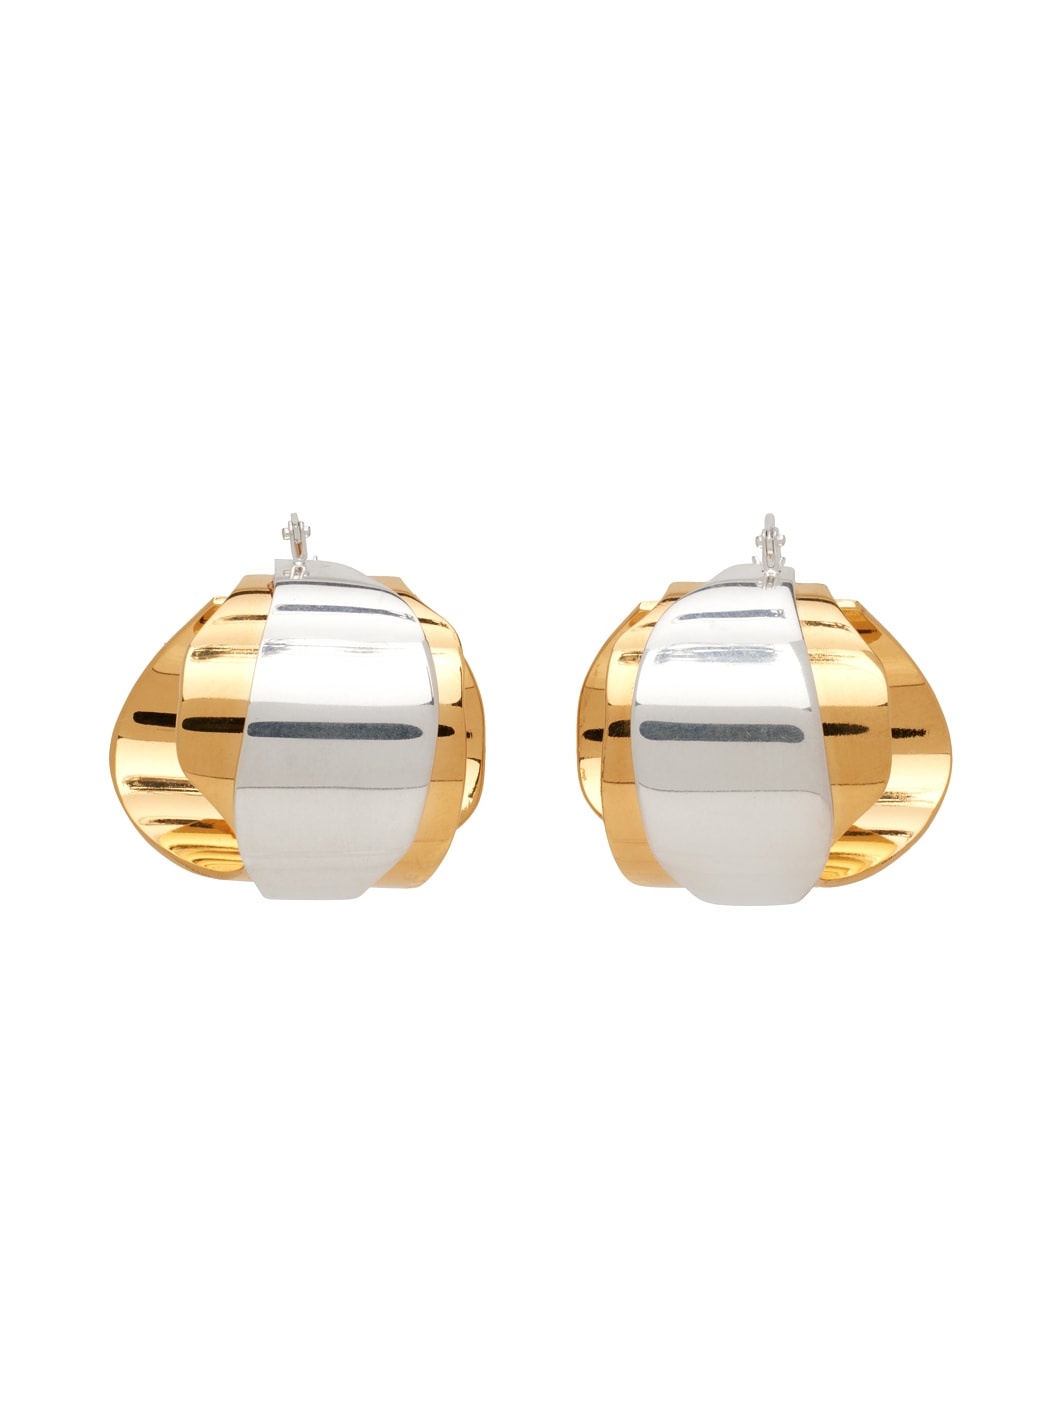 Silver & Gold AW3 Earrings - 1